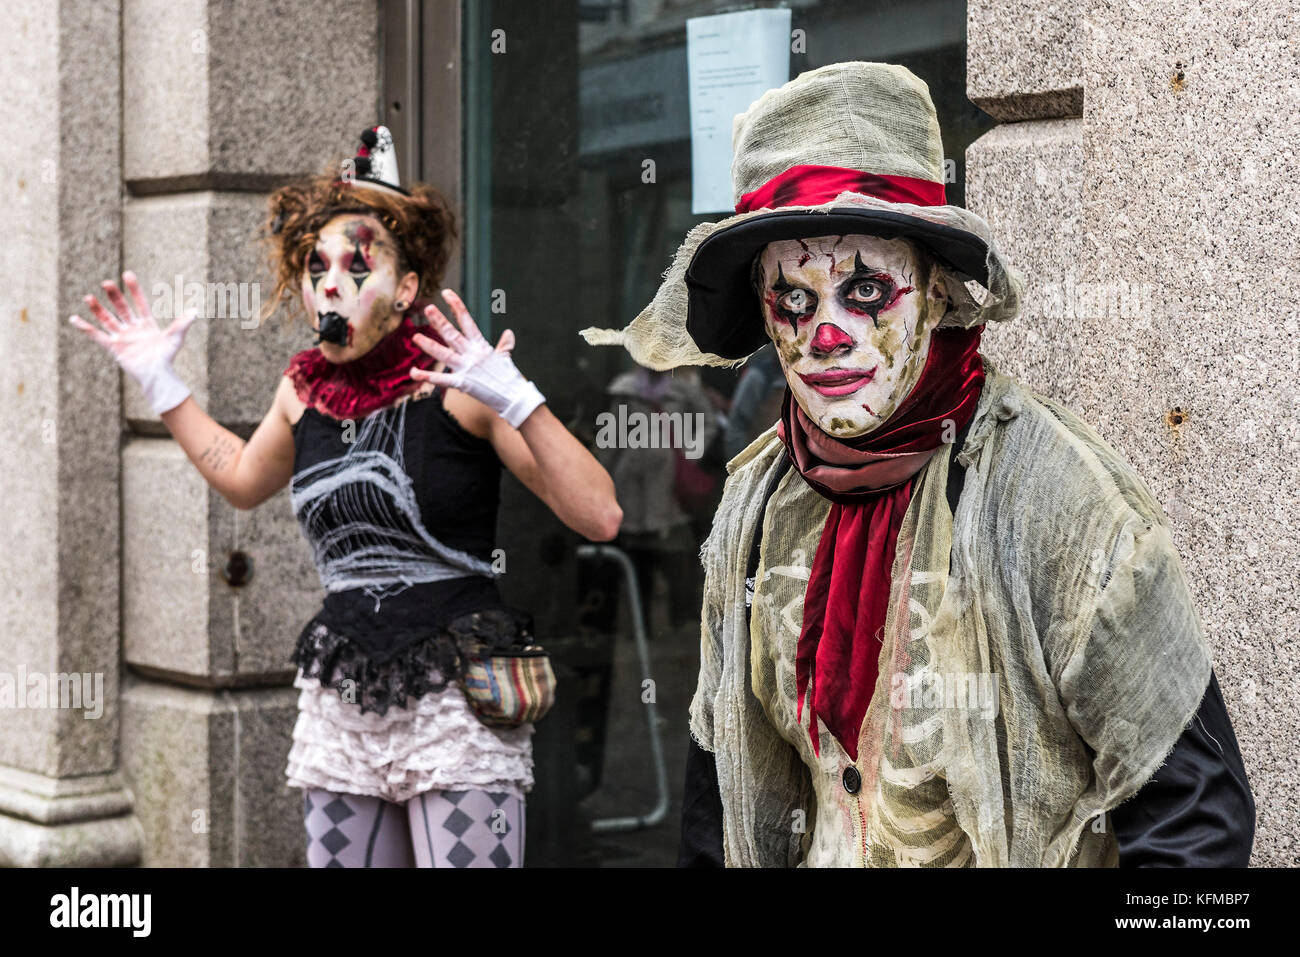 Zombies - zwei Zombie Clowns in der jährlichen Zombie-Crawl in Newquay, Cornwall. Stockfoto